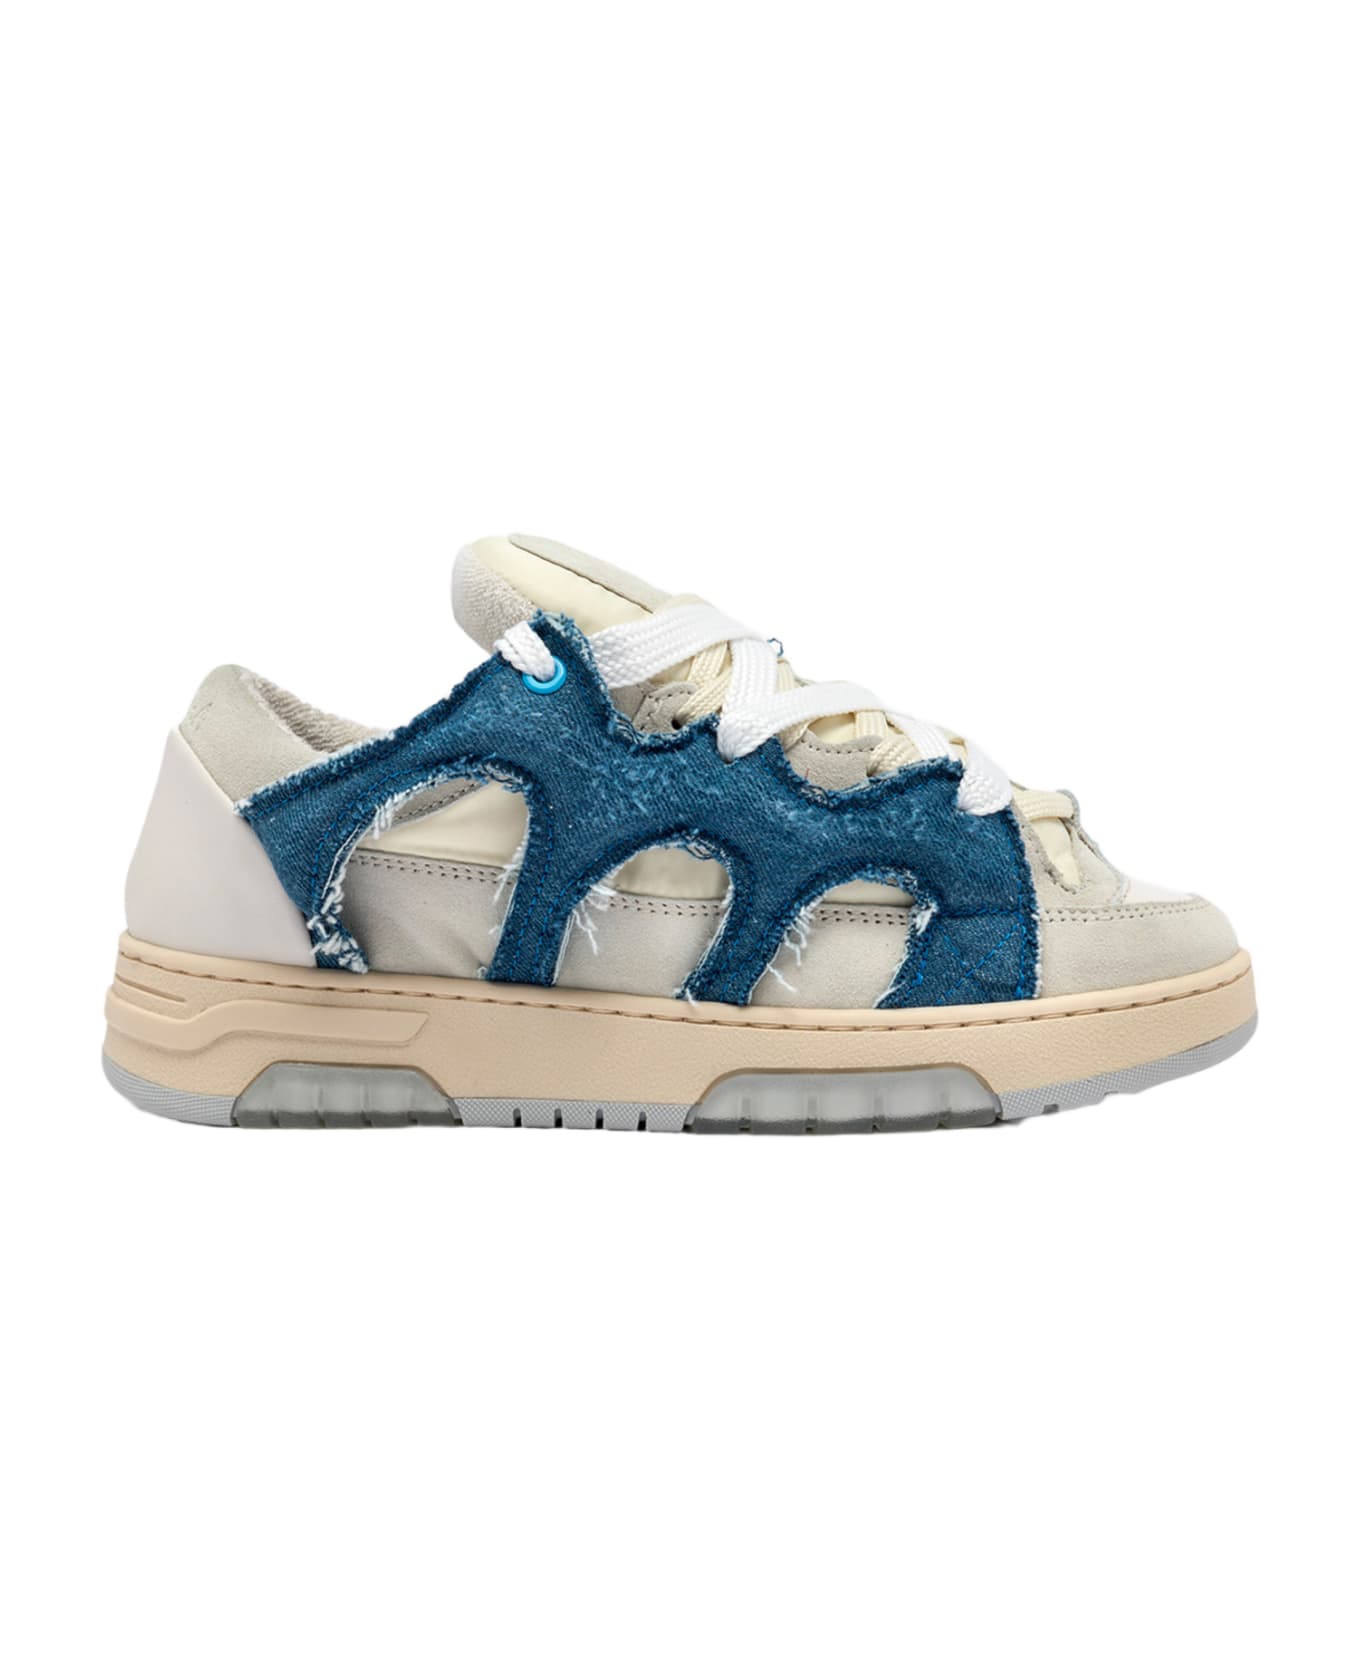 Paura Santha 1 Off white suede and blue denim low sneaker - Denim スニーカー